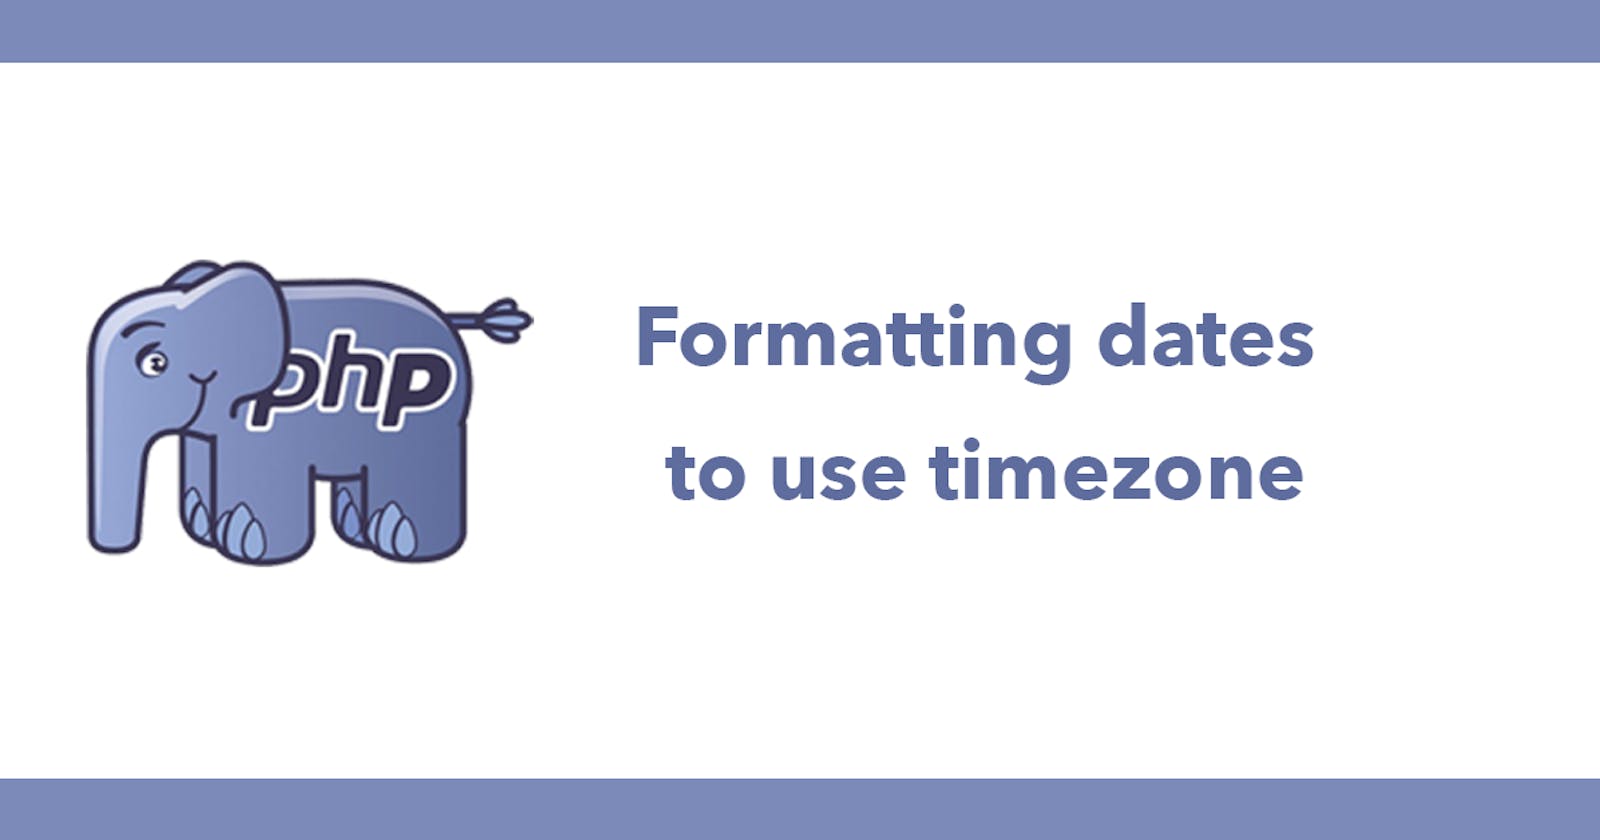 Formatting dates to use timezone